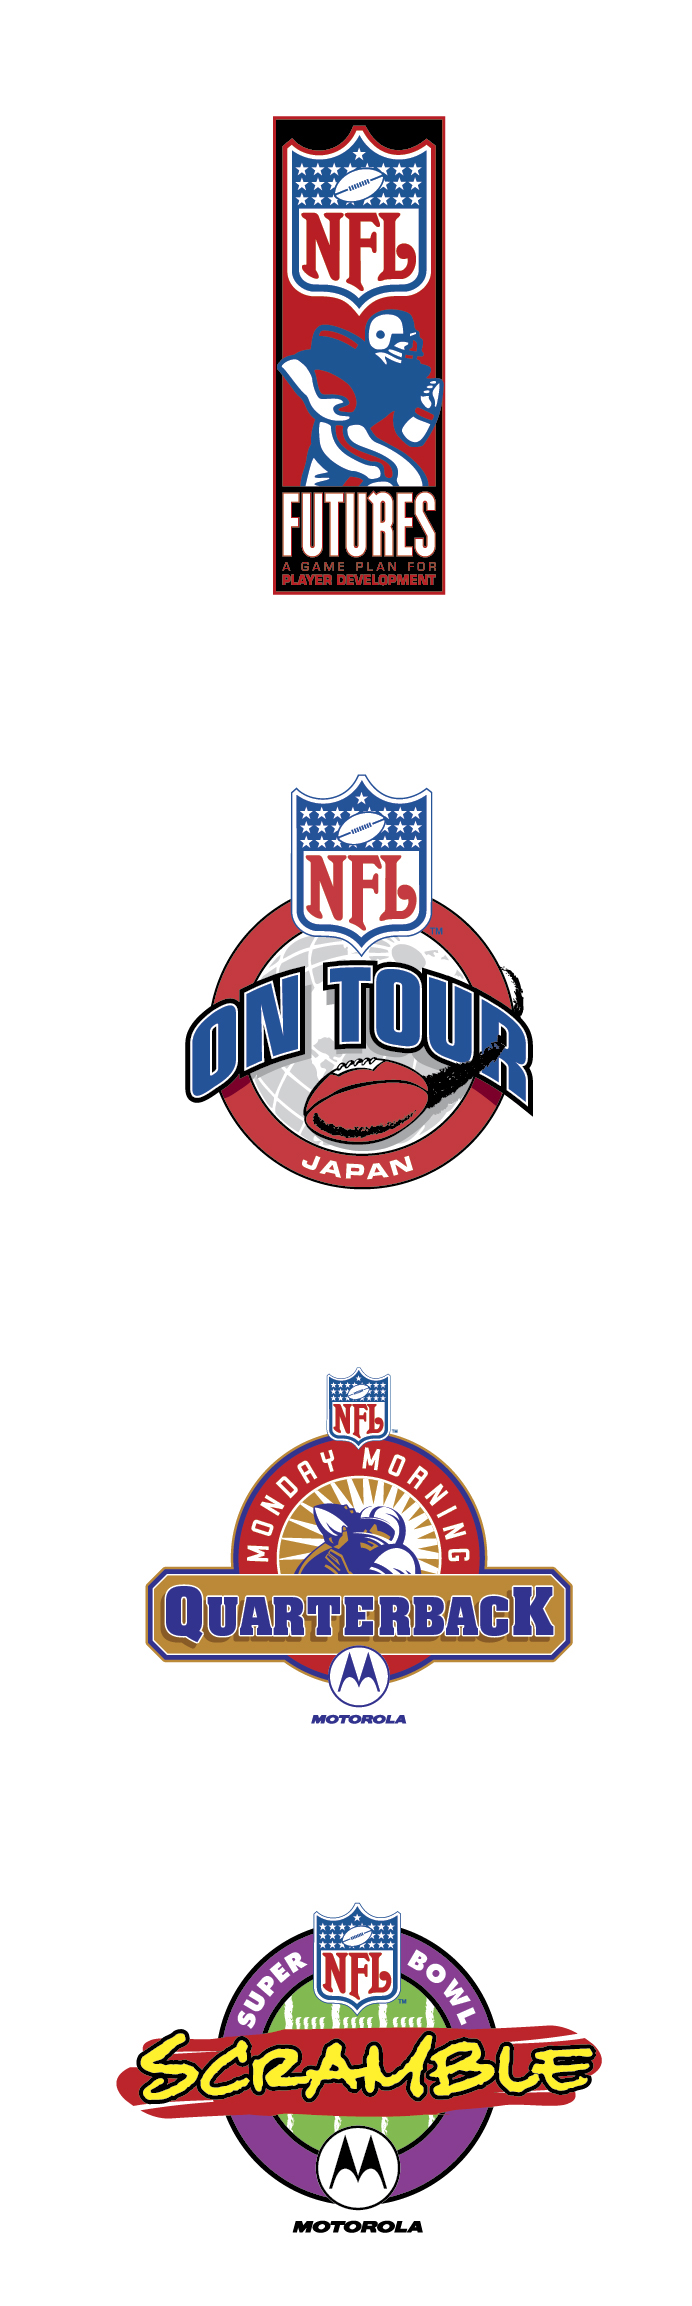 NFL International logo lockup